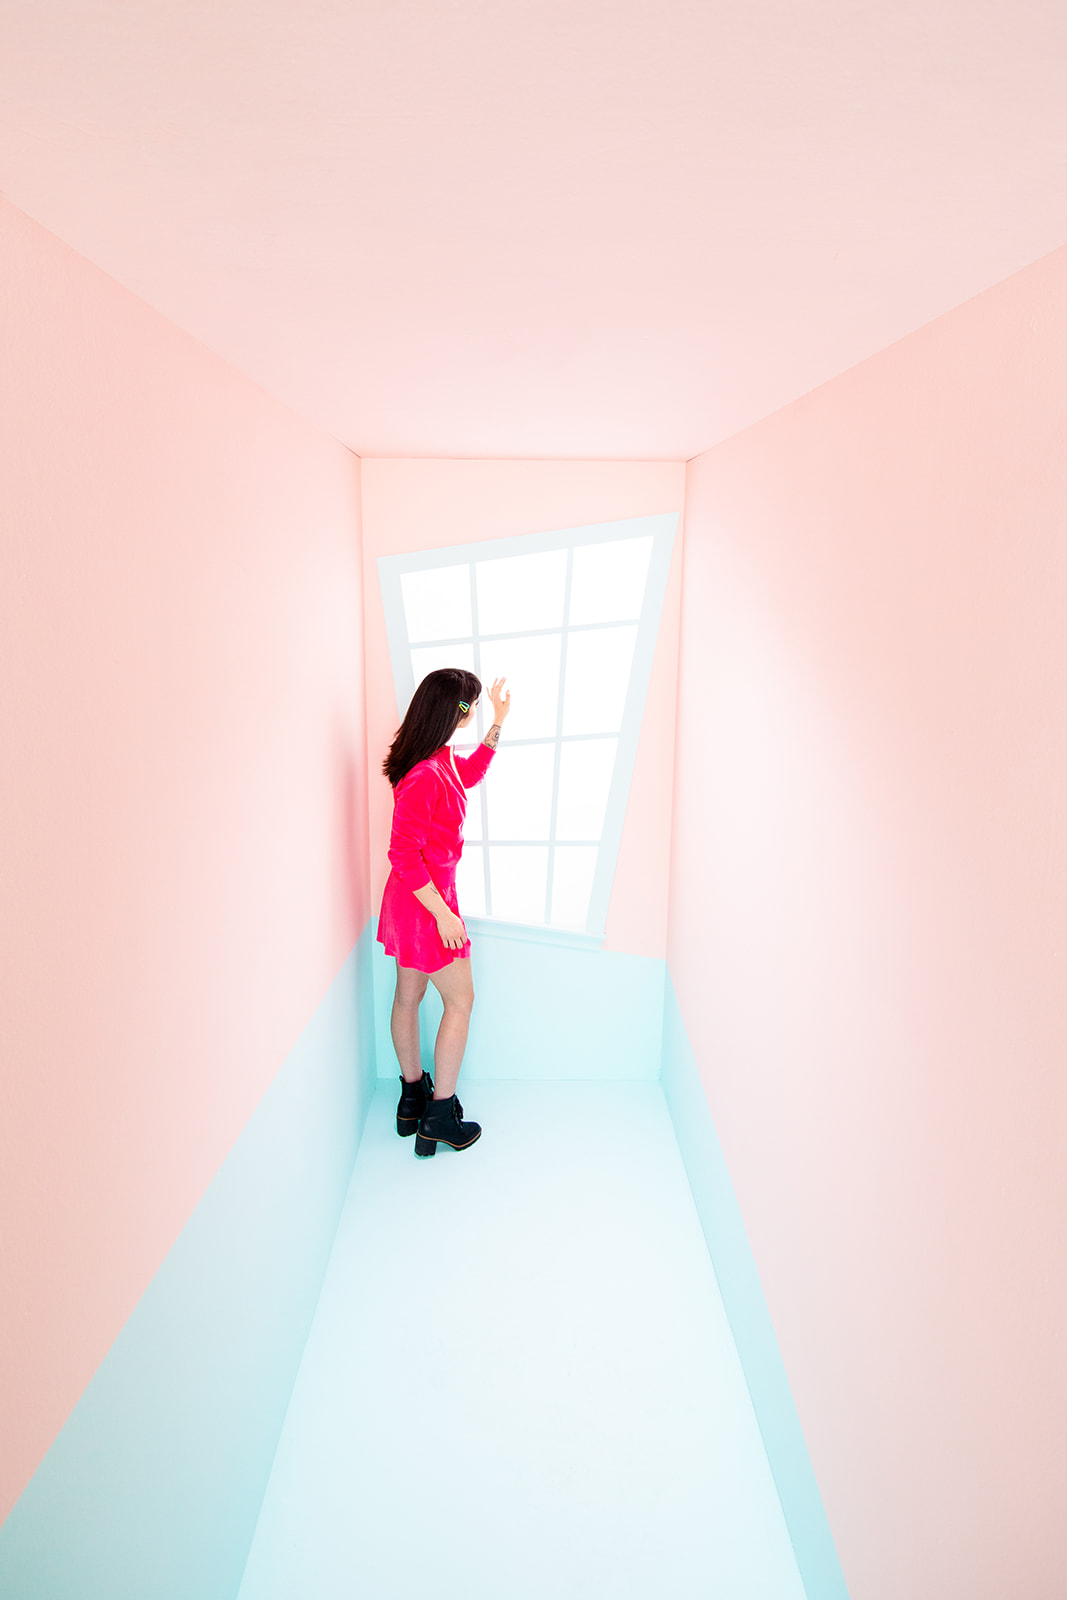 Surreal Forced Perspective Hallway Photoshoot - Jada And David Parrish